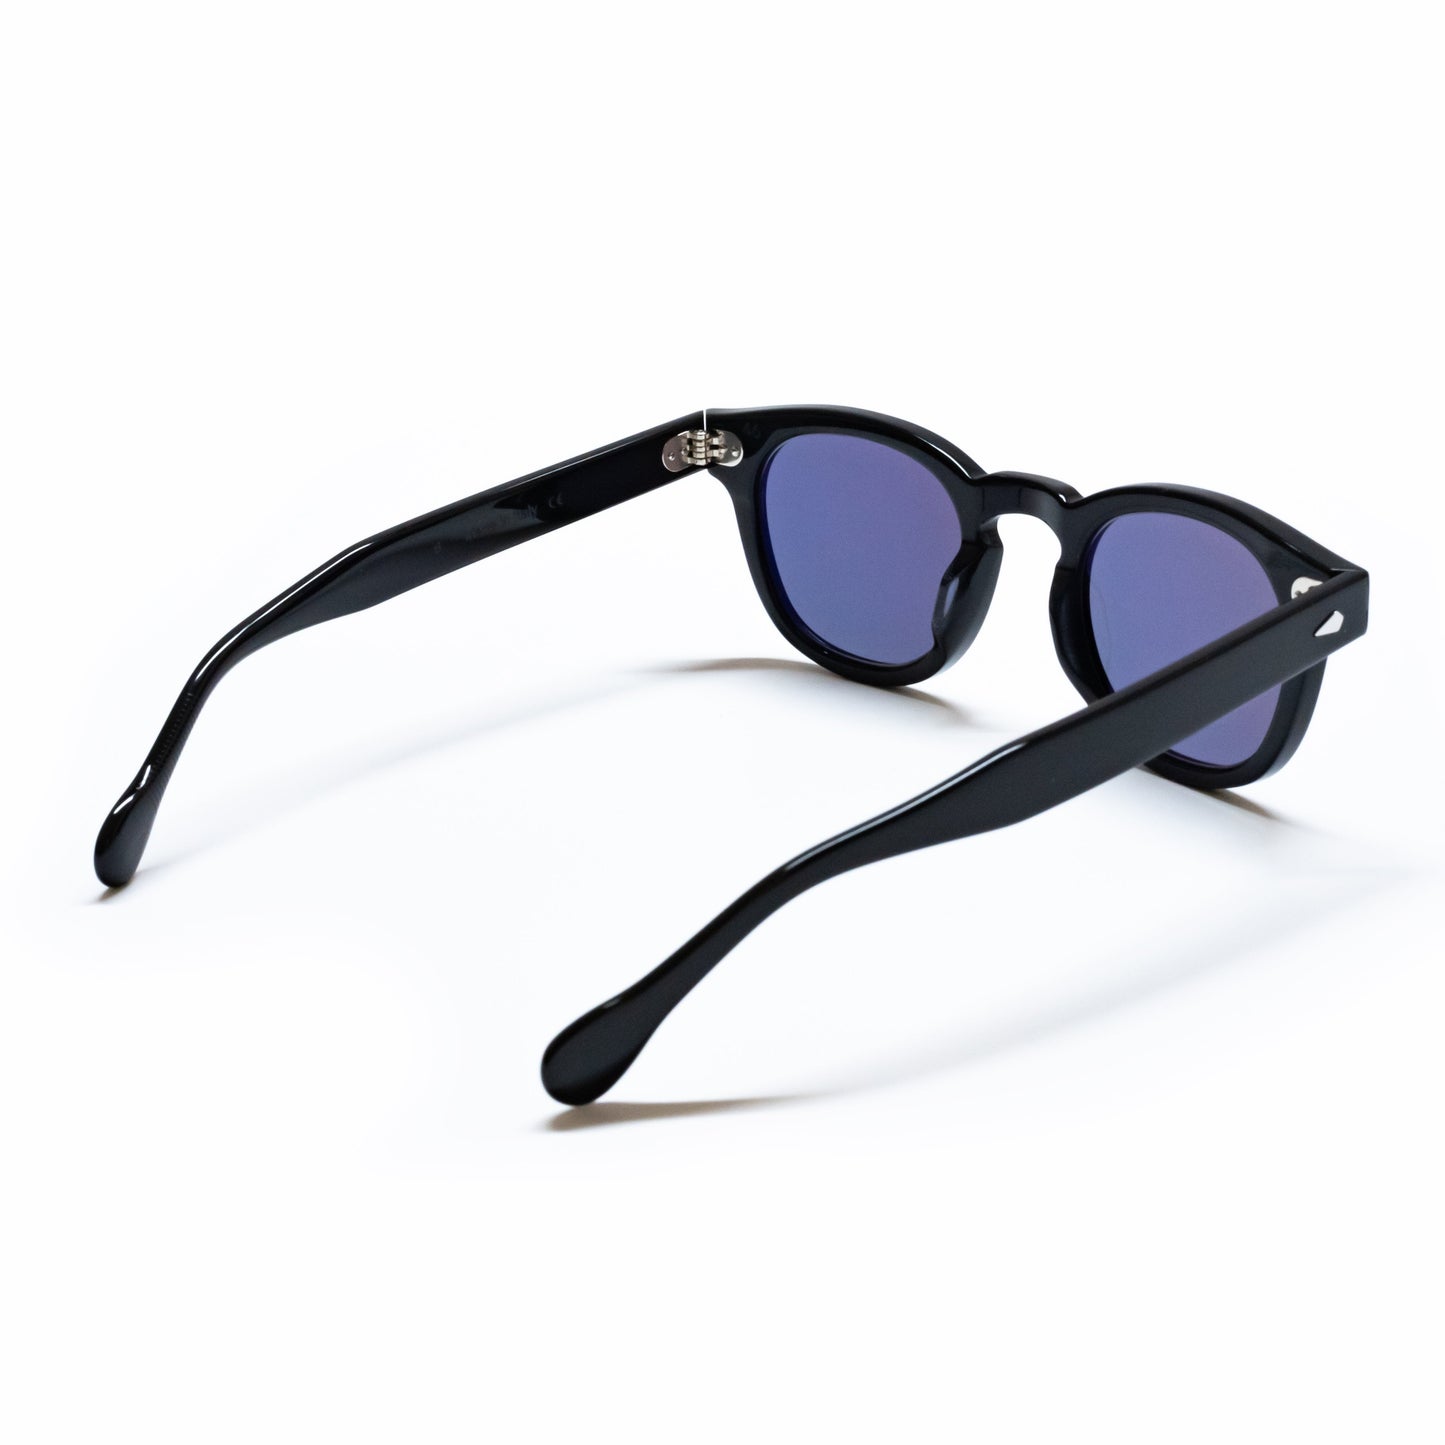 Arnel® Sunglasses | Italy |  Standard Bridge Fit